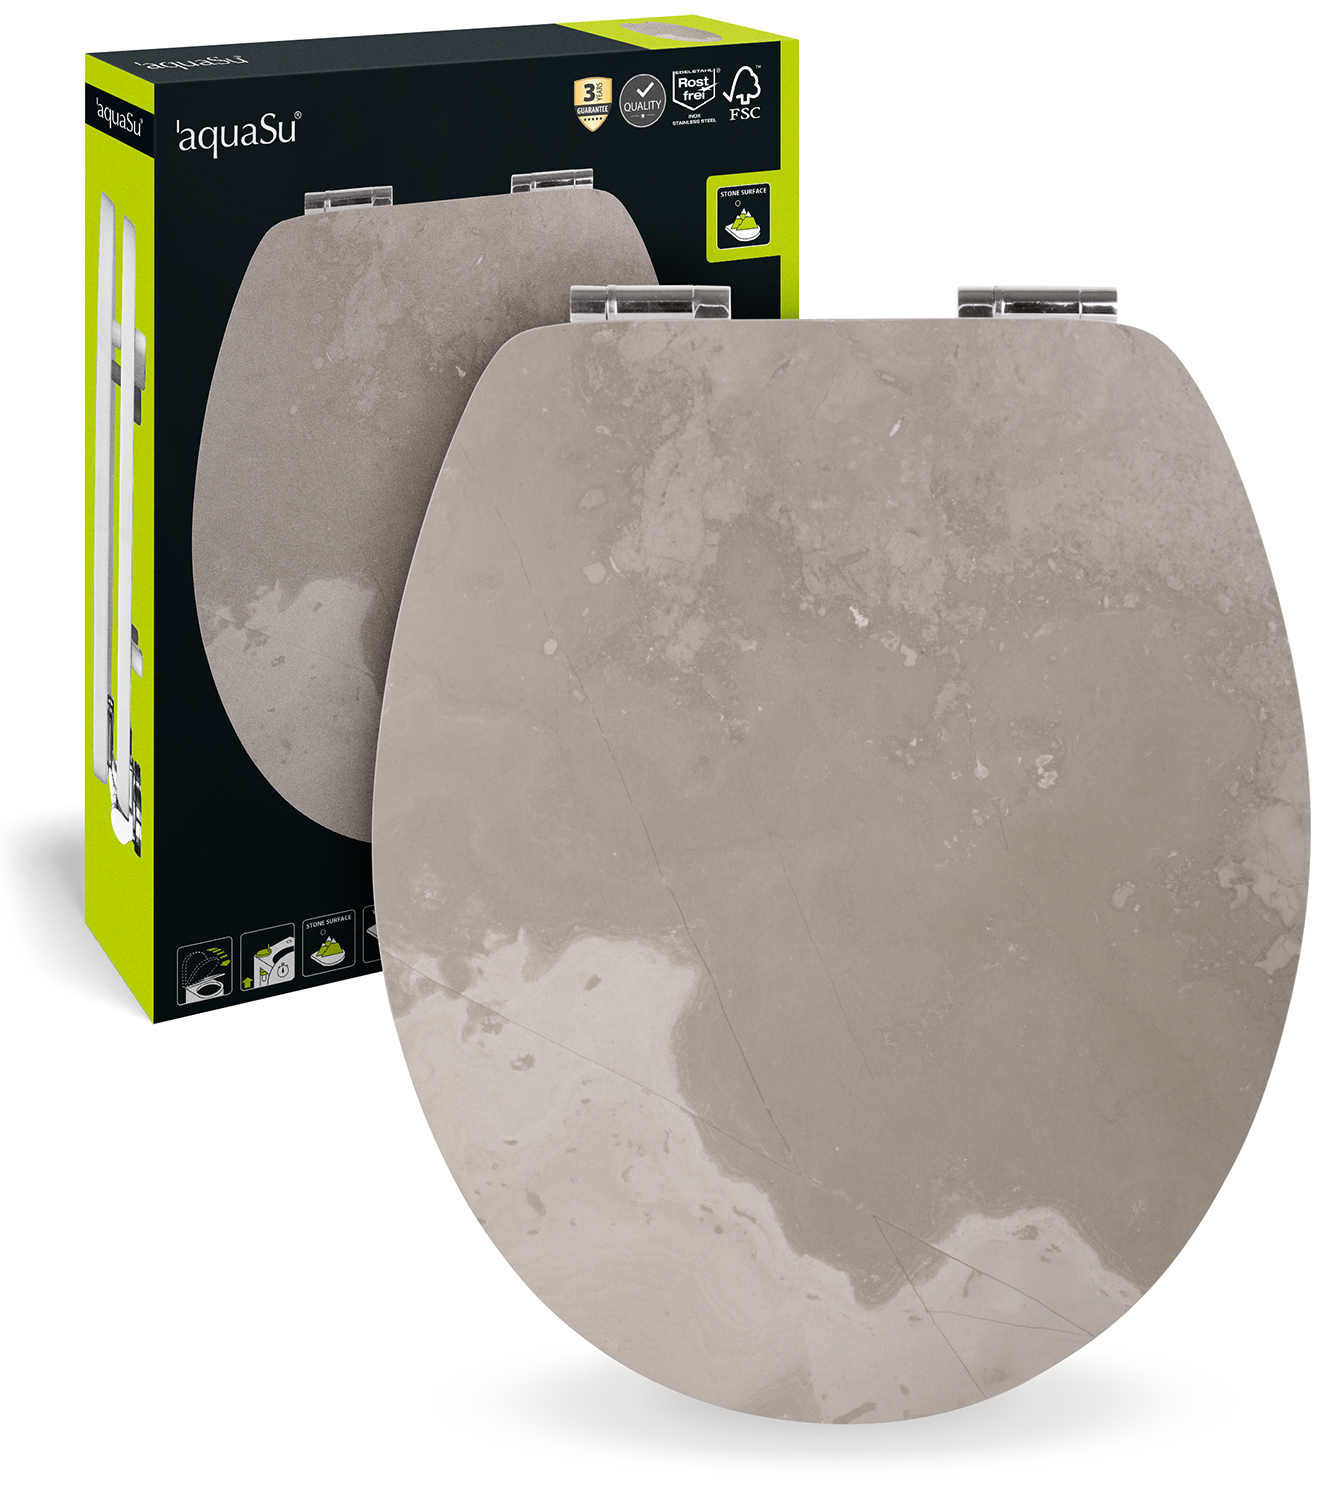 'aquaSu® WC Sitz mit Absenkautomatik und Motiv Coffee Cloud, Stein-Oberfläche, Holzkern, Fast-Fix